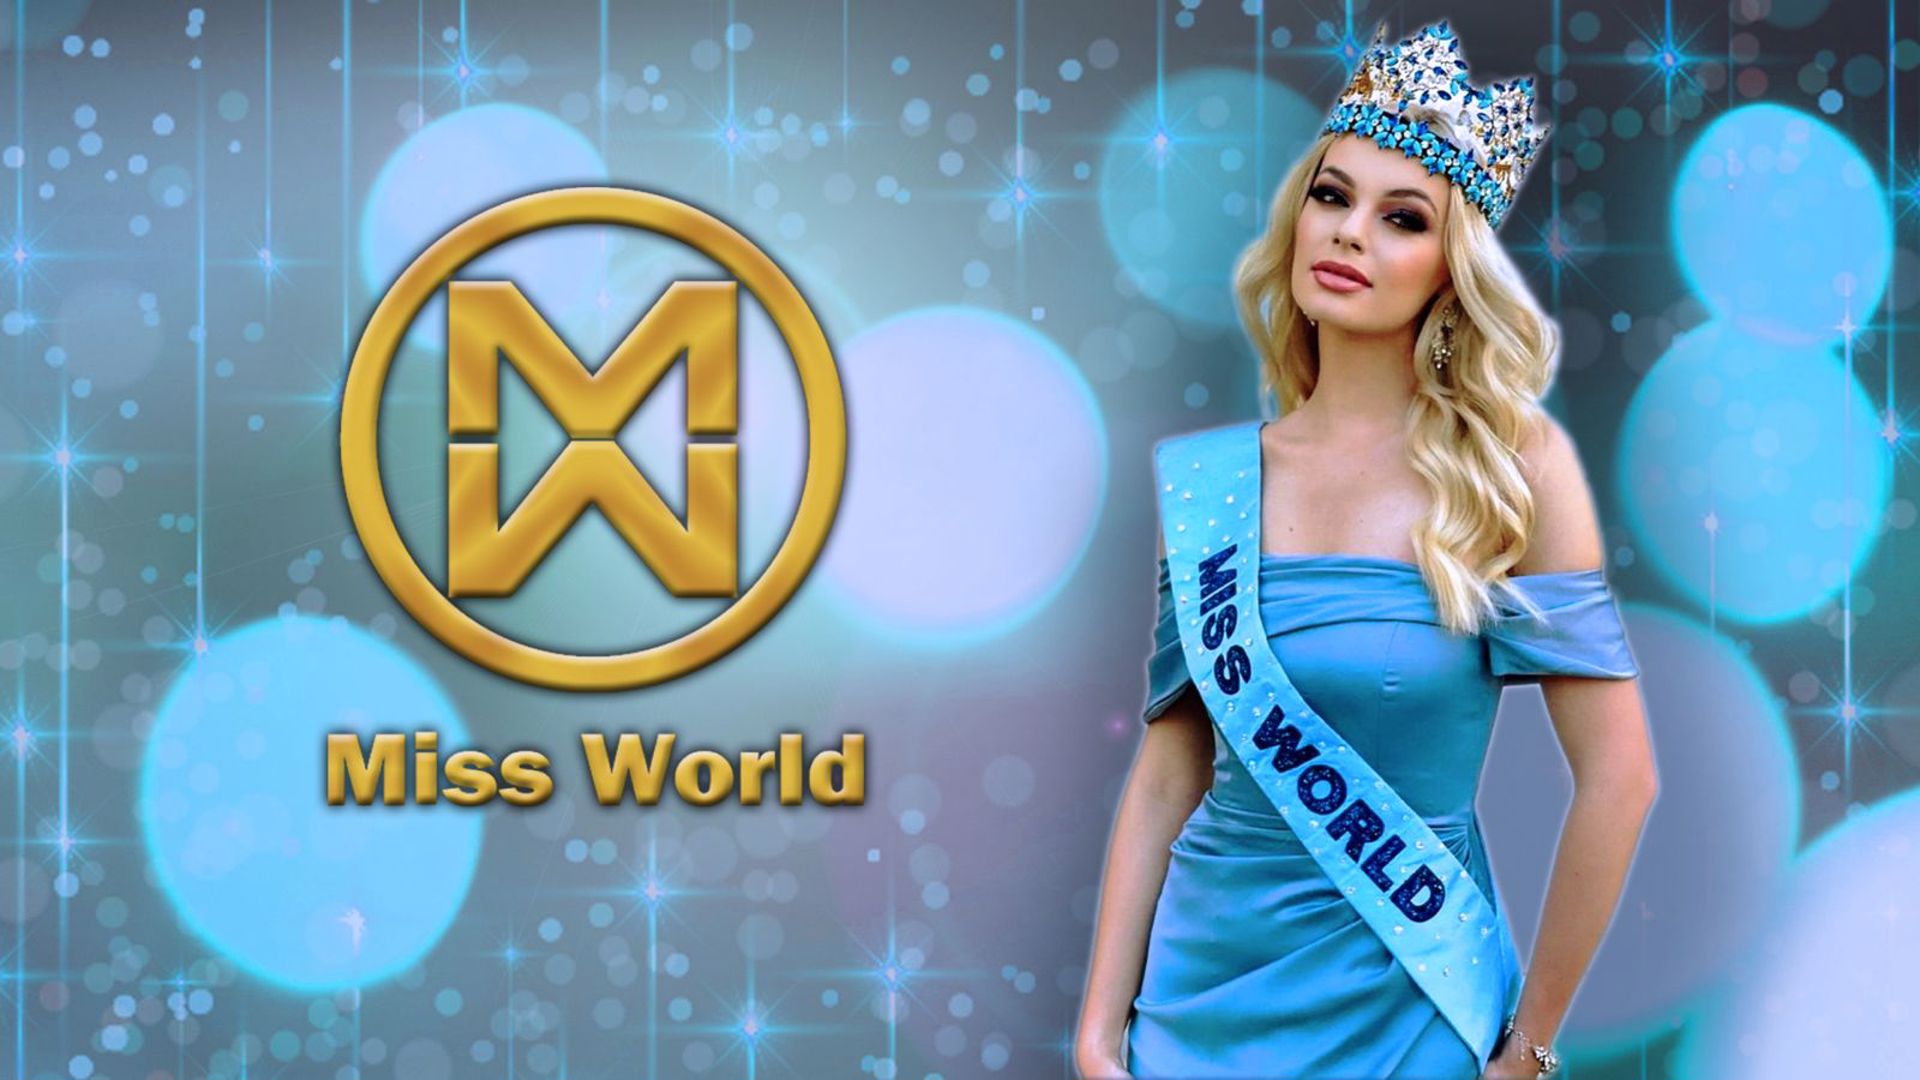 71st Miss World